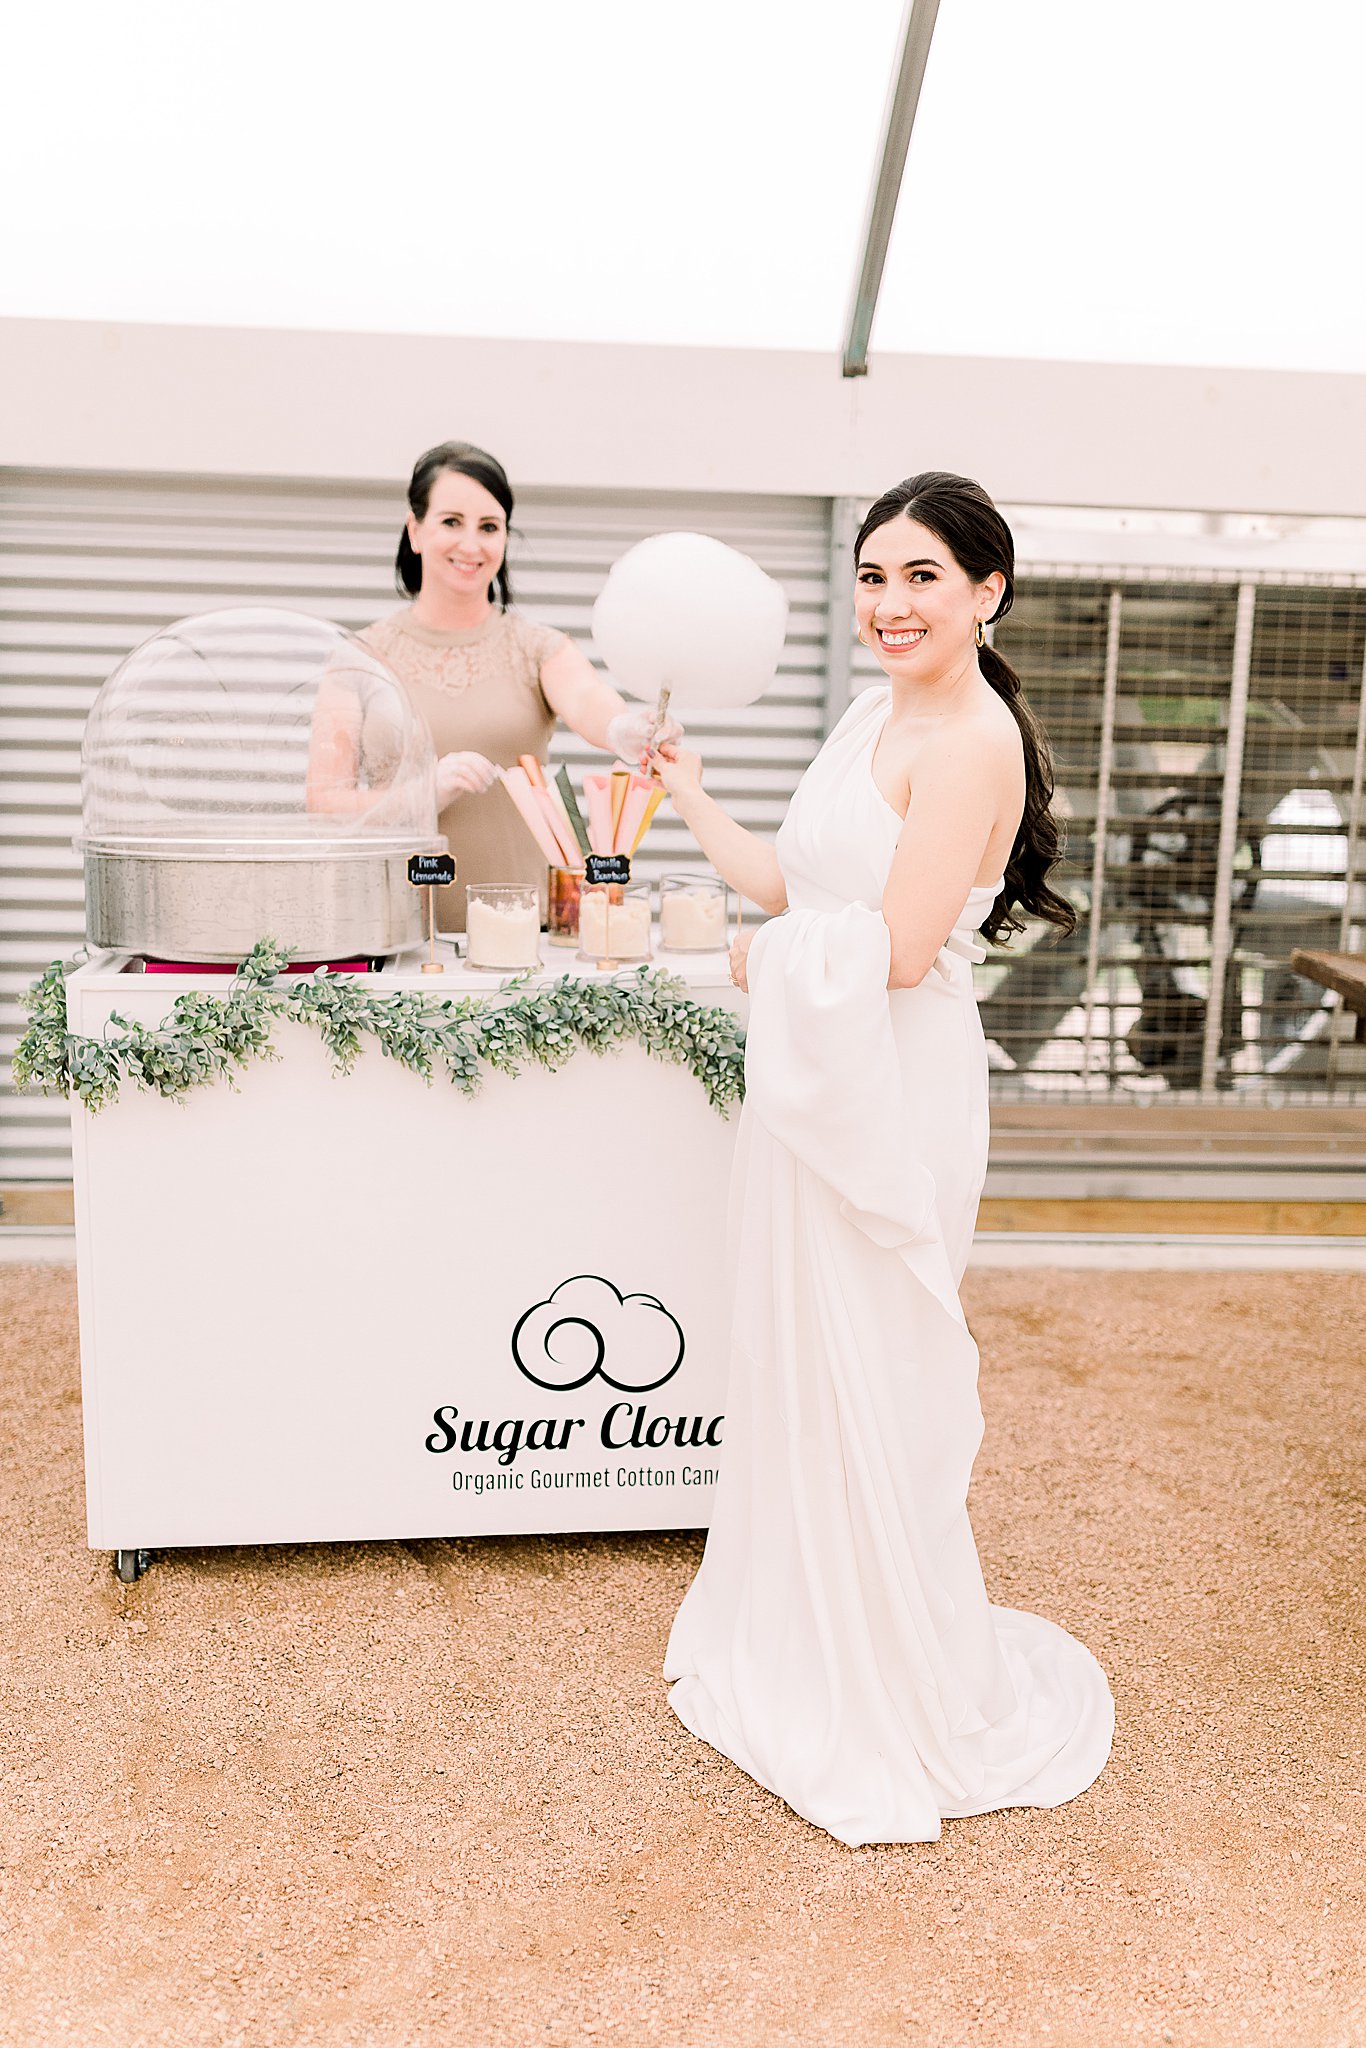 Sugar Cloud gourmet cotton candy wedding caterer Austin, Texas